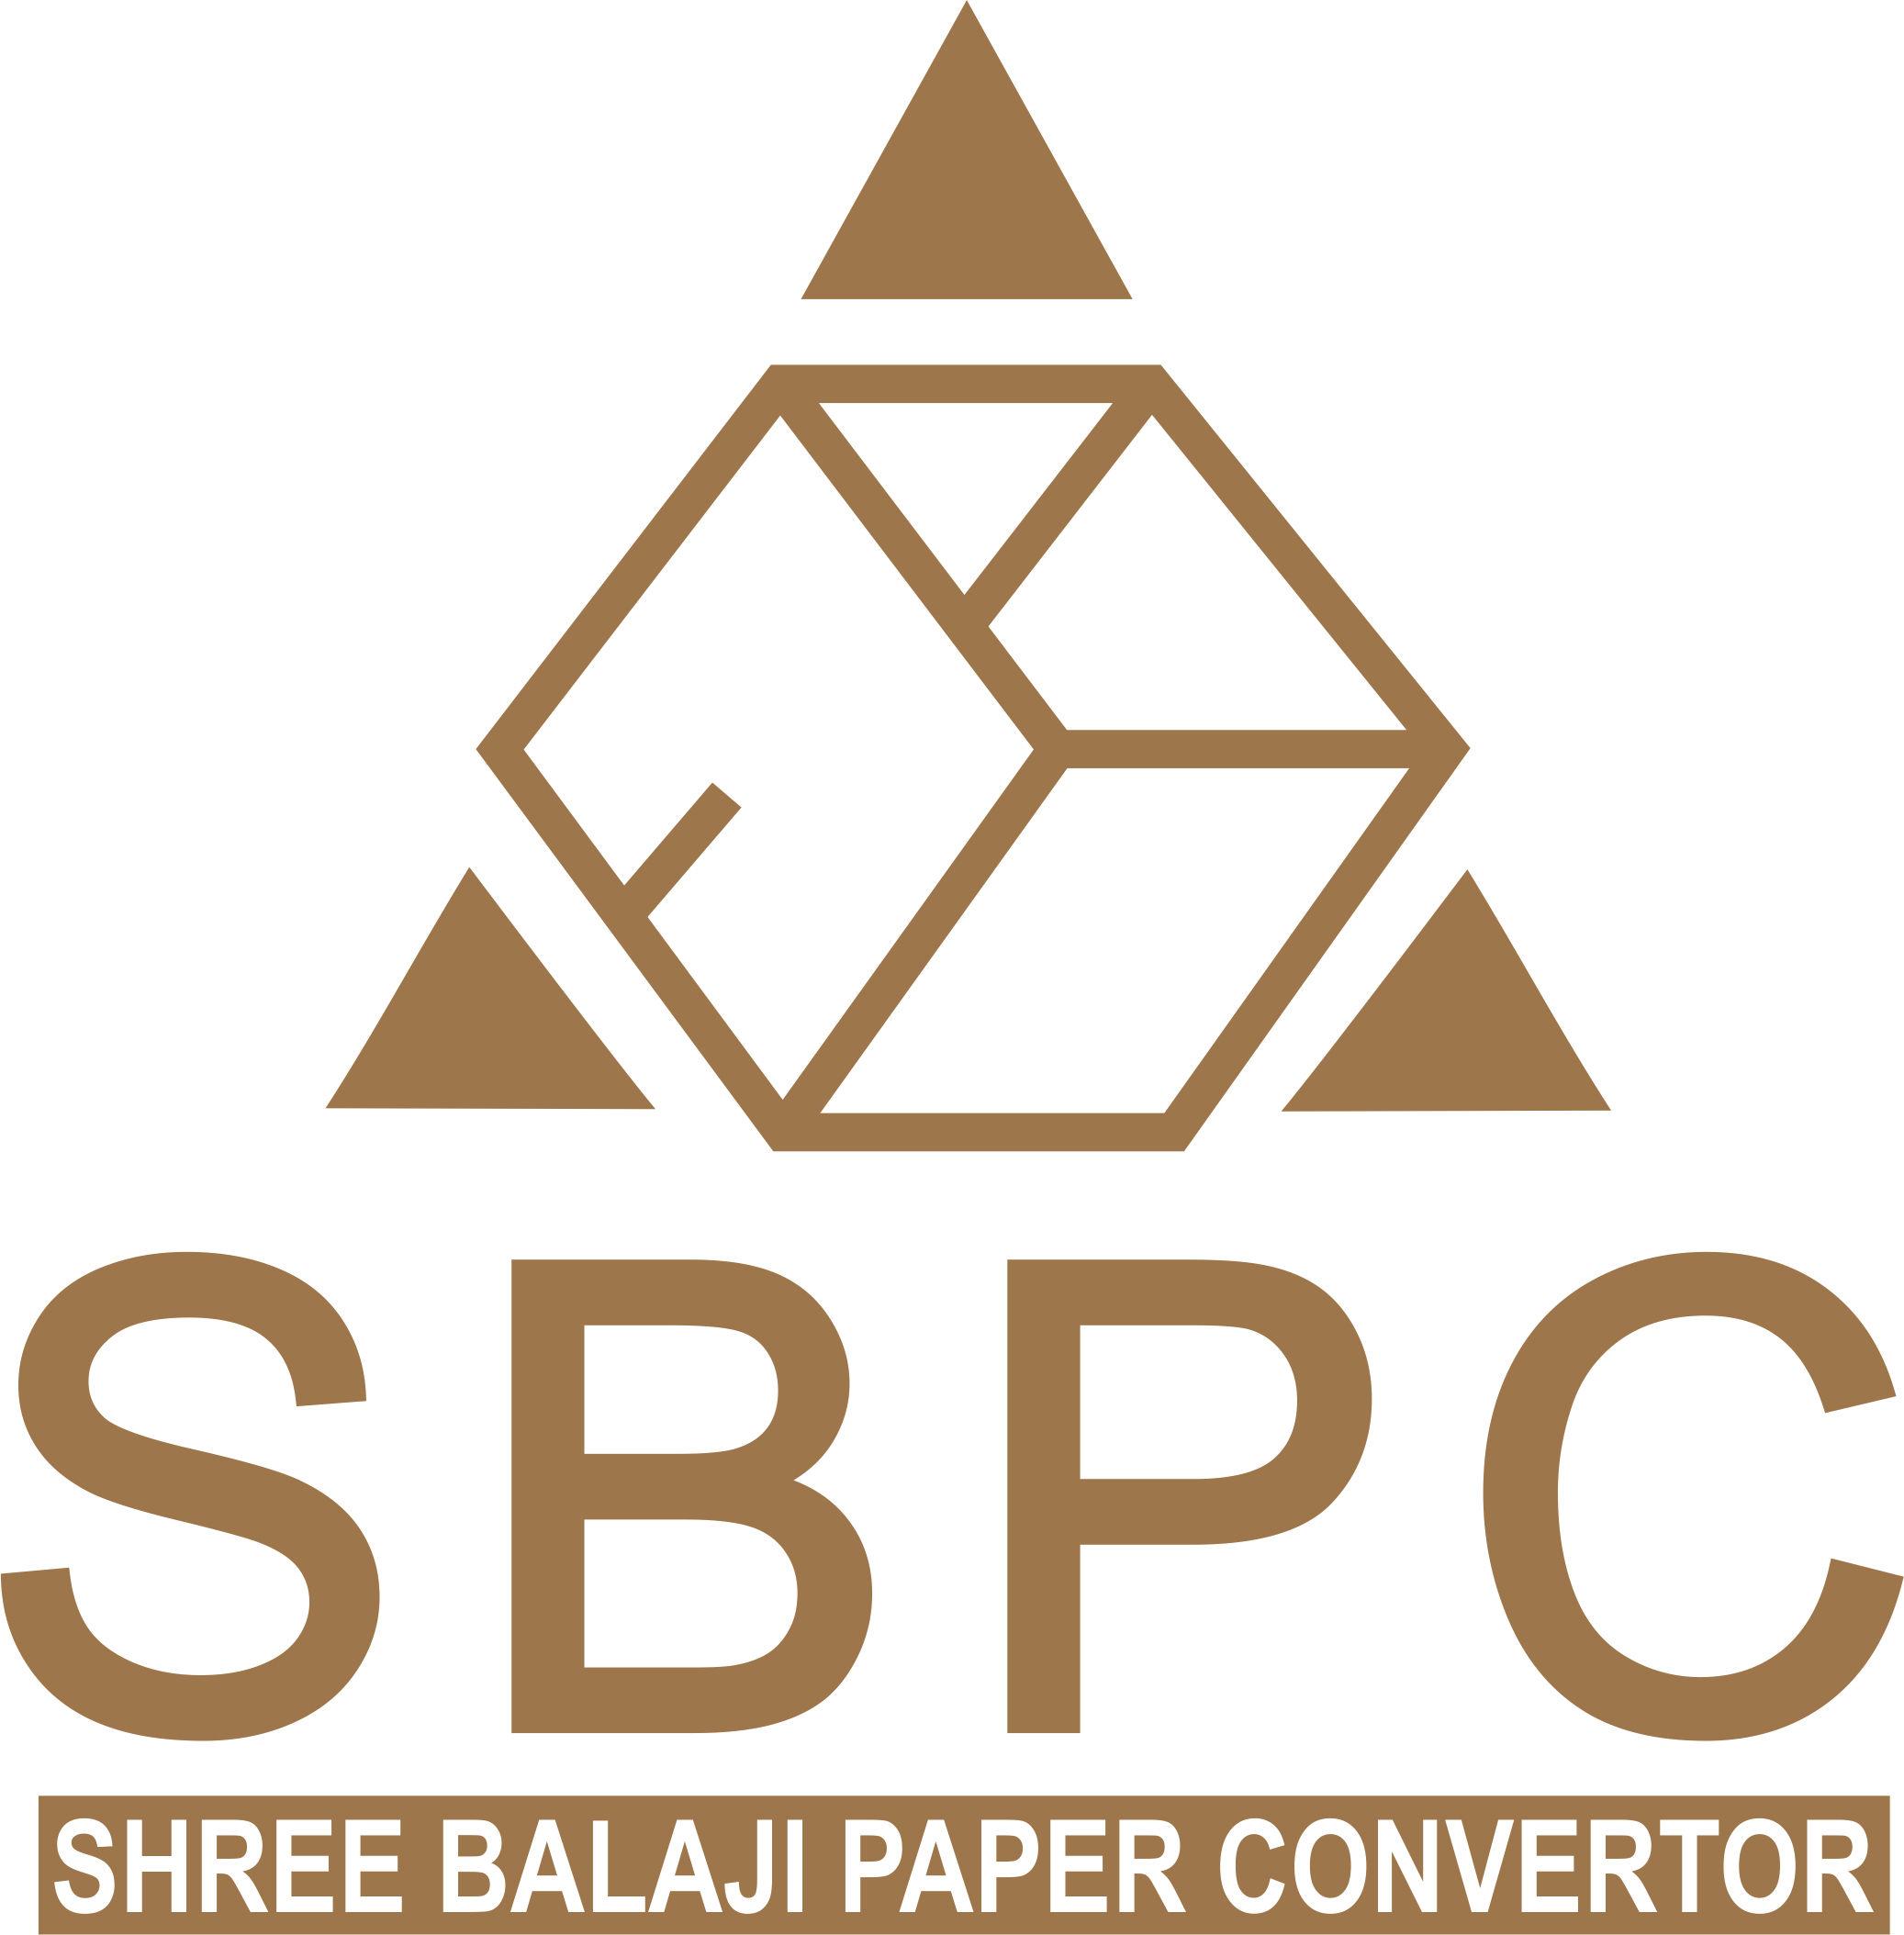 SHREE BALAJI PAPER CONVERTOR